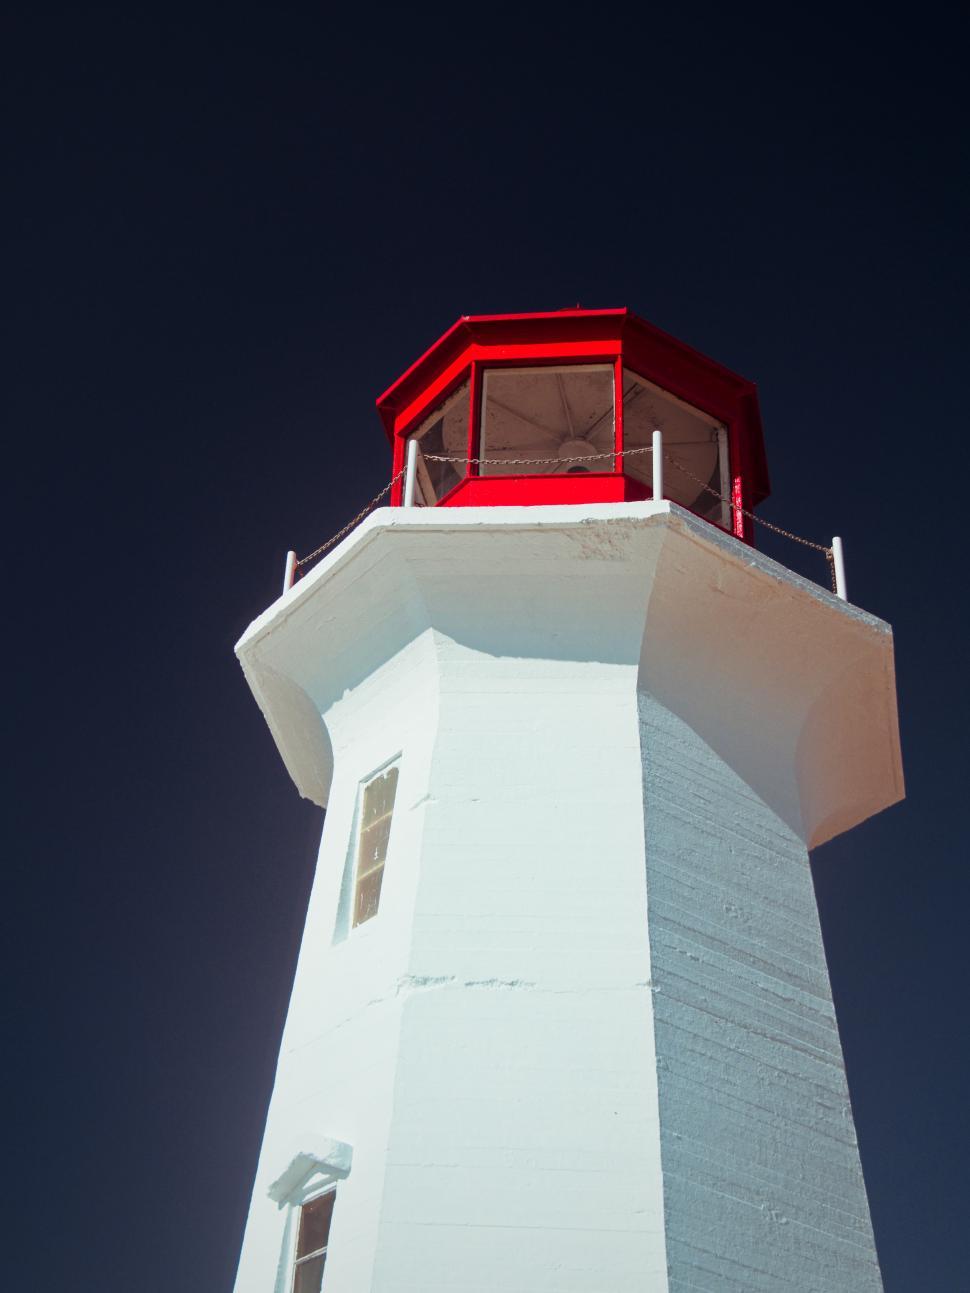 Free Image of Lighthouse Sky Architecture Free Stock Photo 